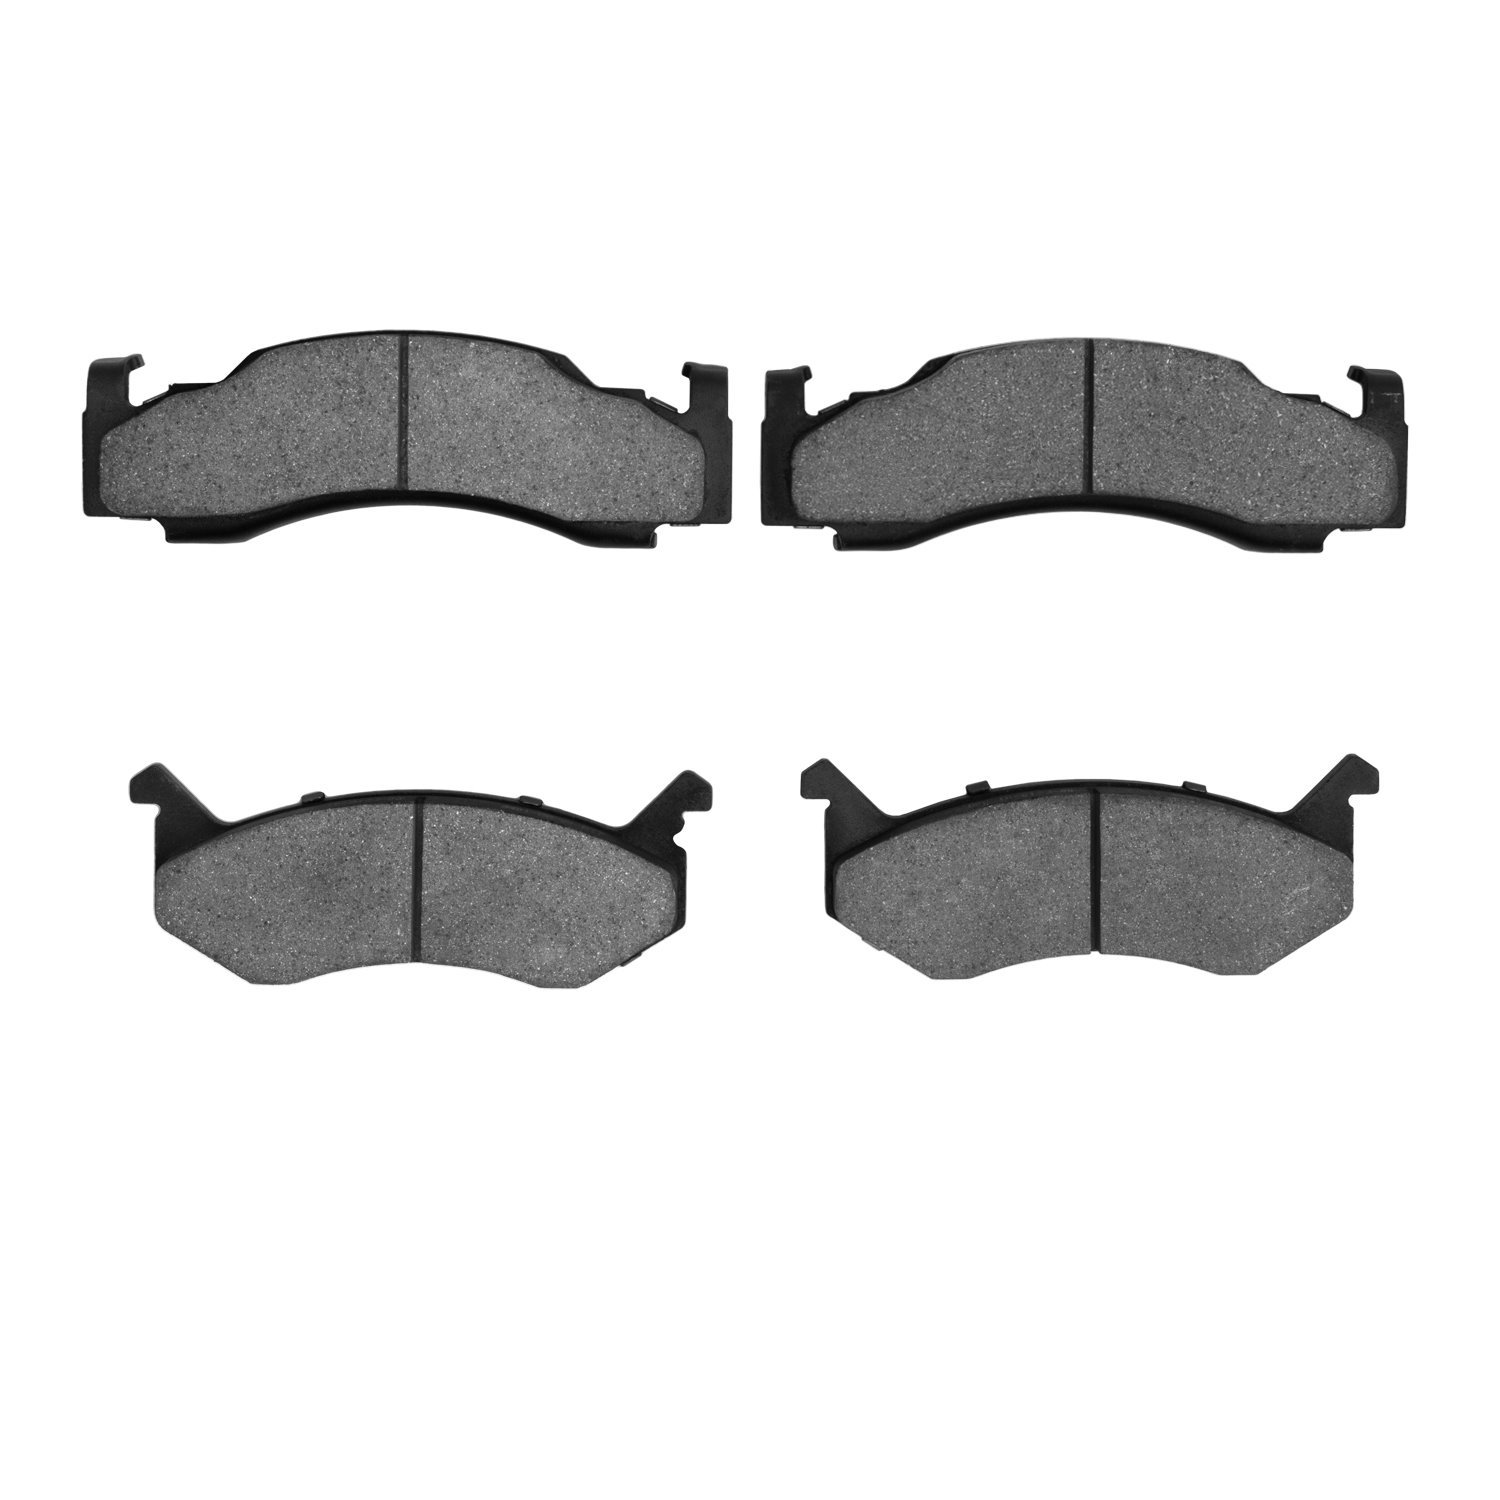 1310-0123-00 3000-Series Ceramic Brake Pads, 1973-1997 Mopar, Position: Front